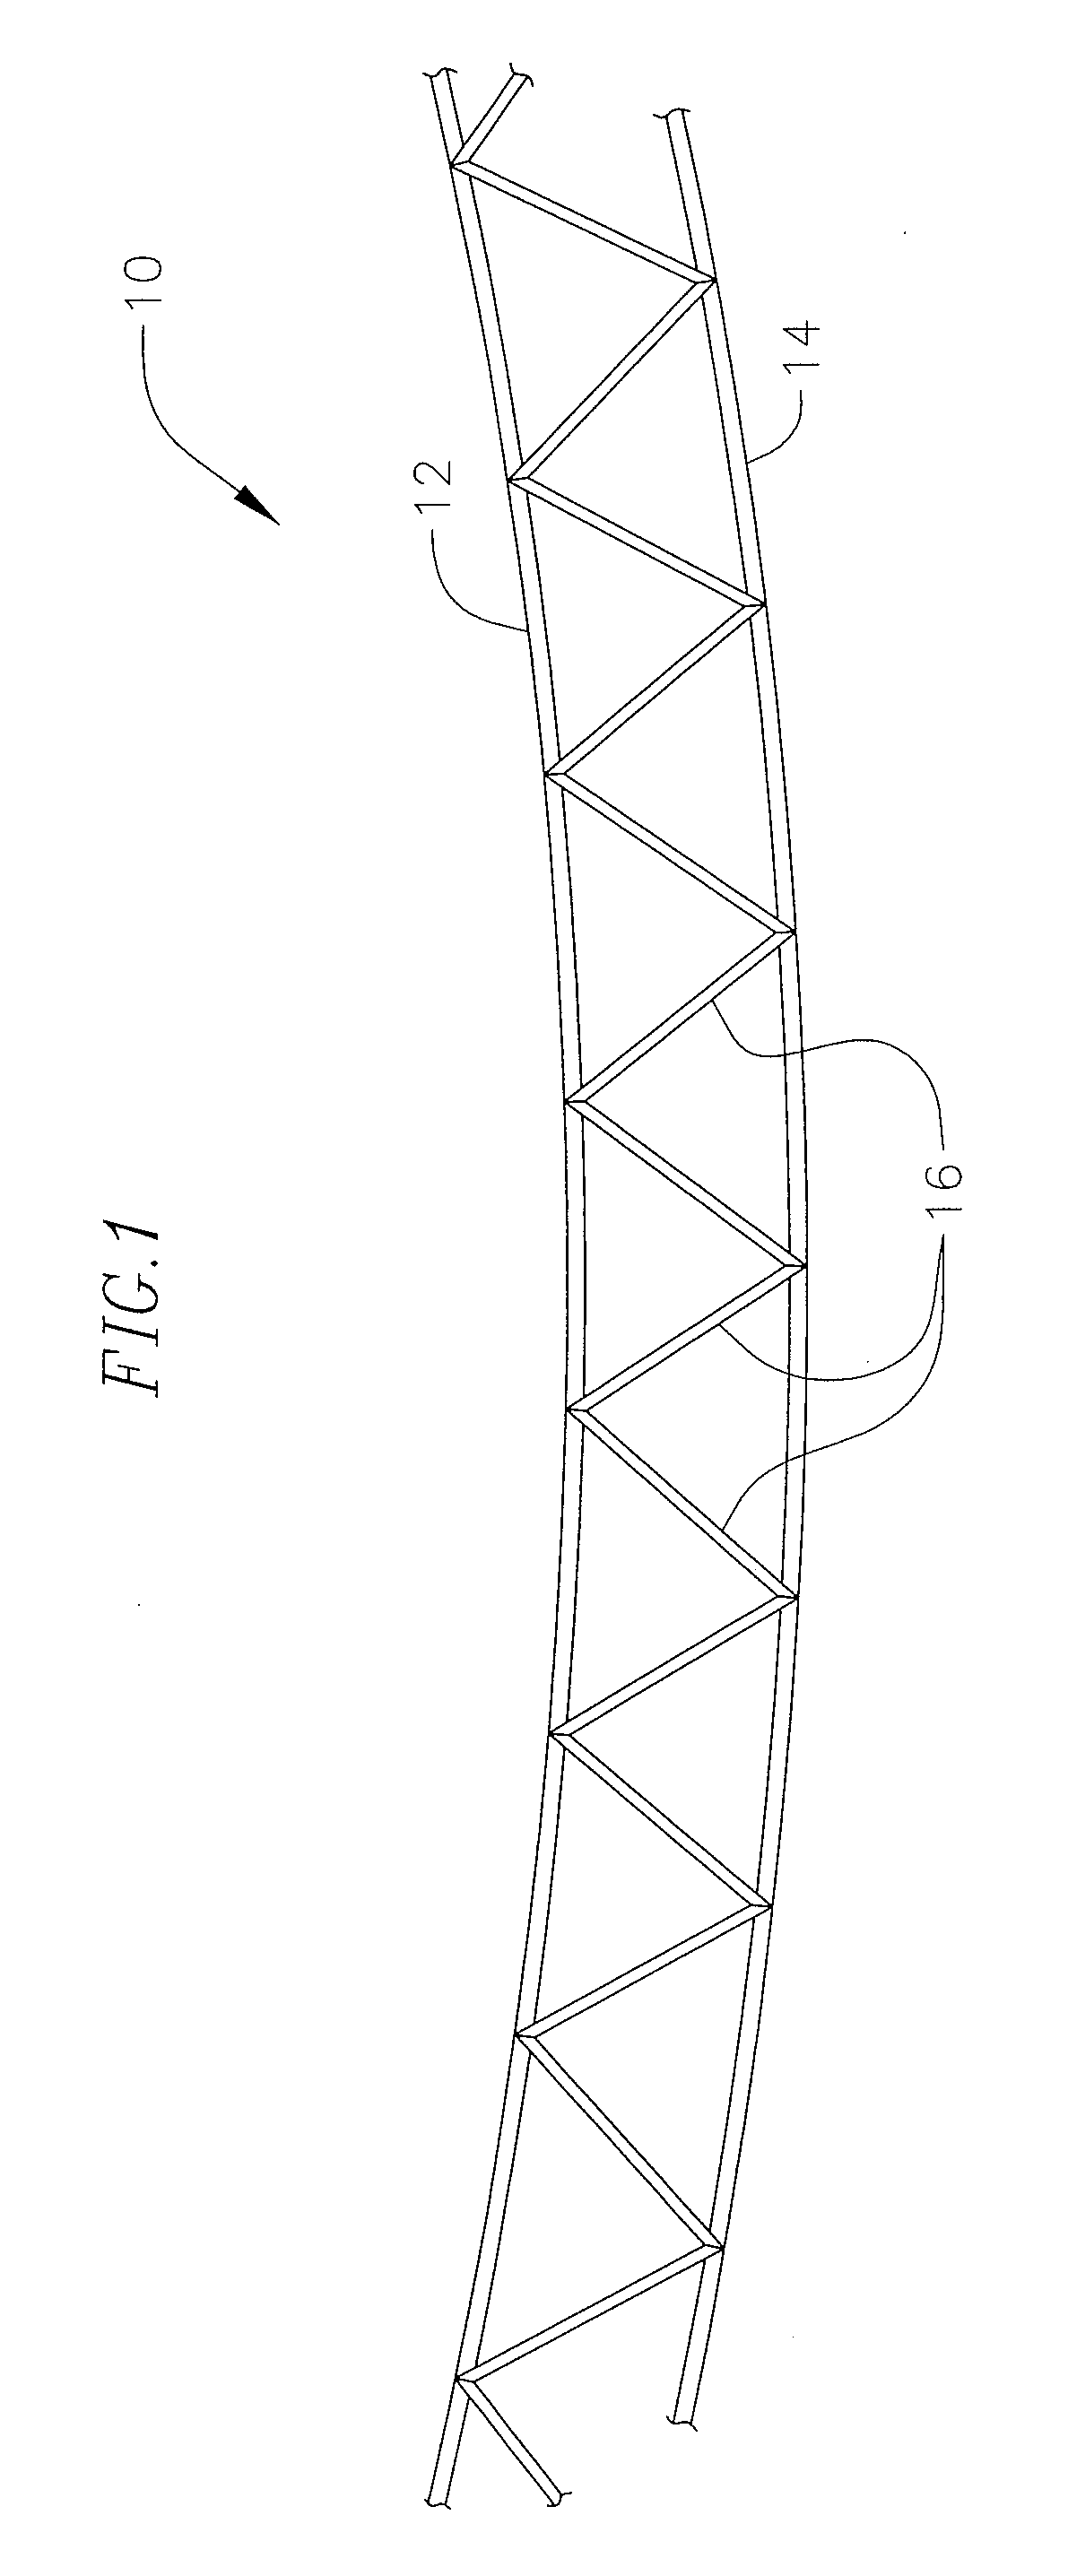 Mini-truss thin-sheet panel assembly